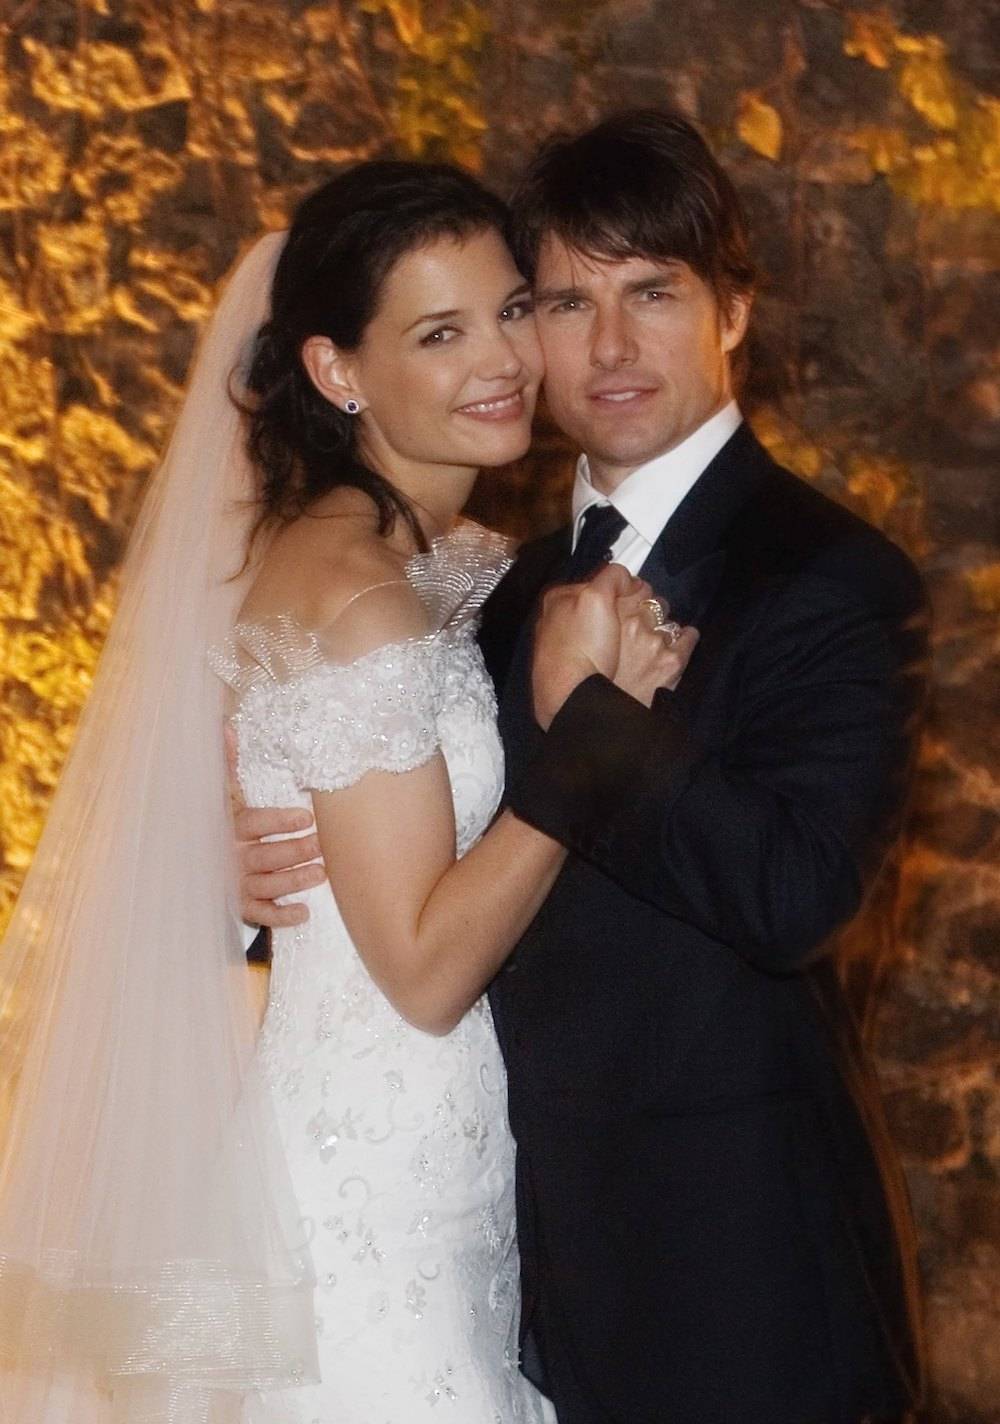 Ślub z Tomem (Fot. Getty Images)